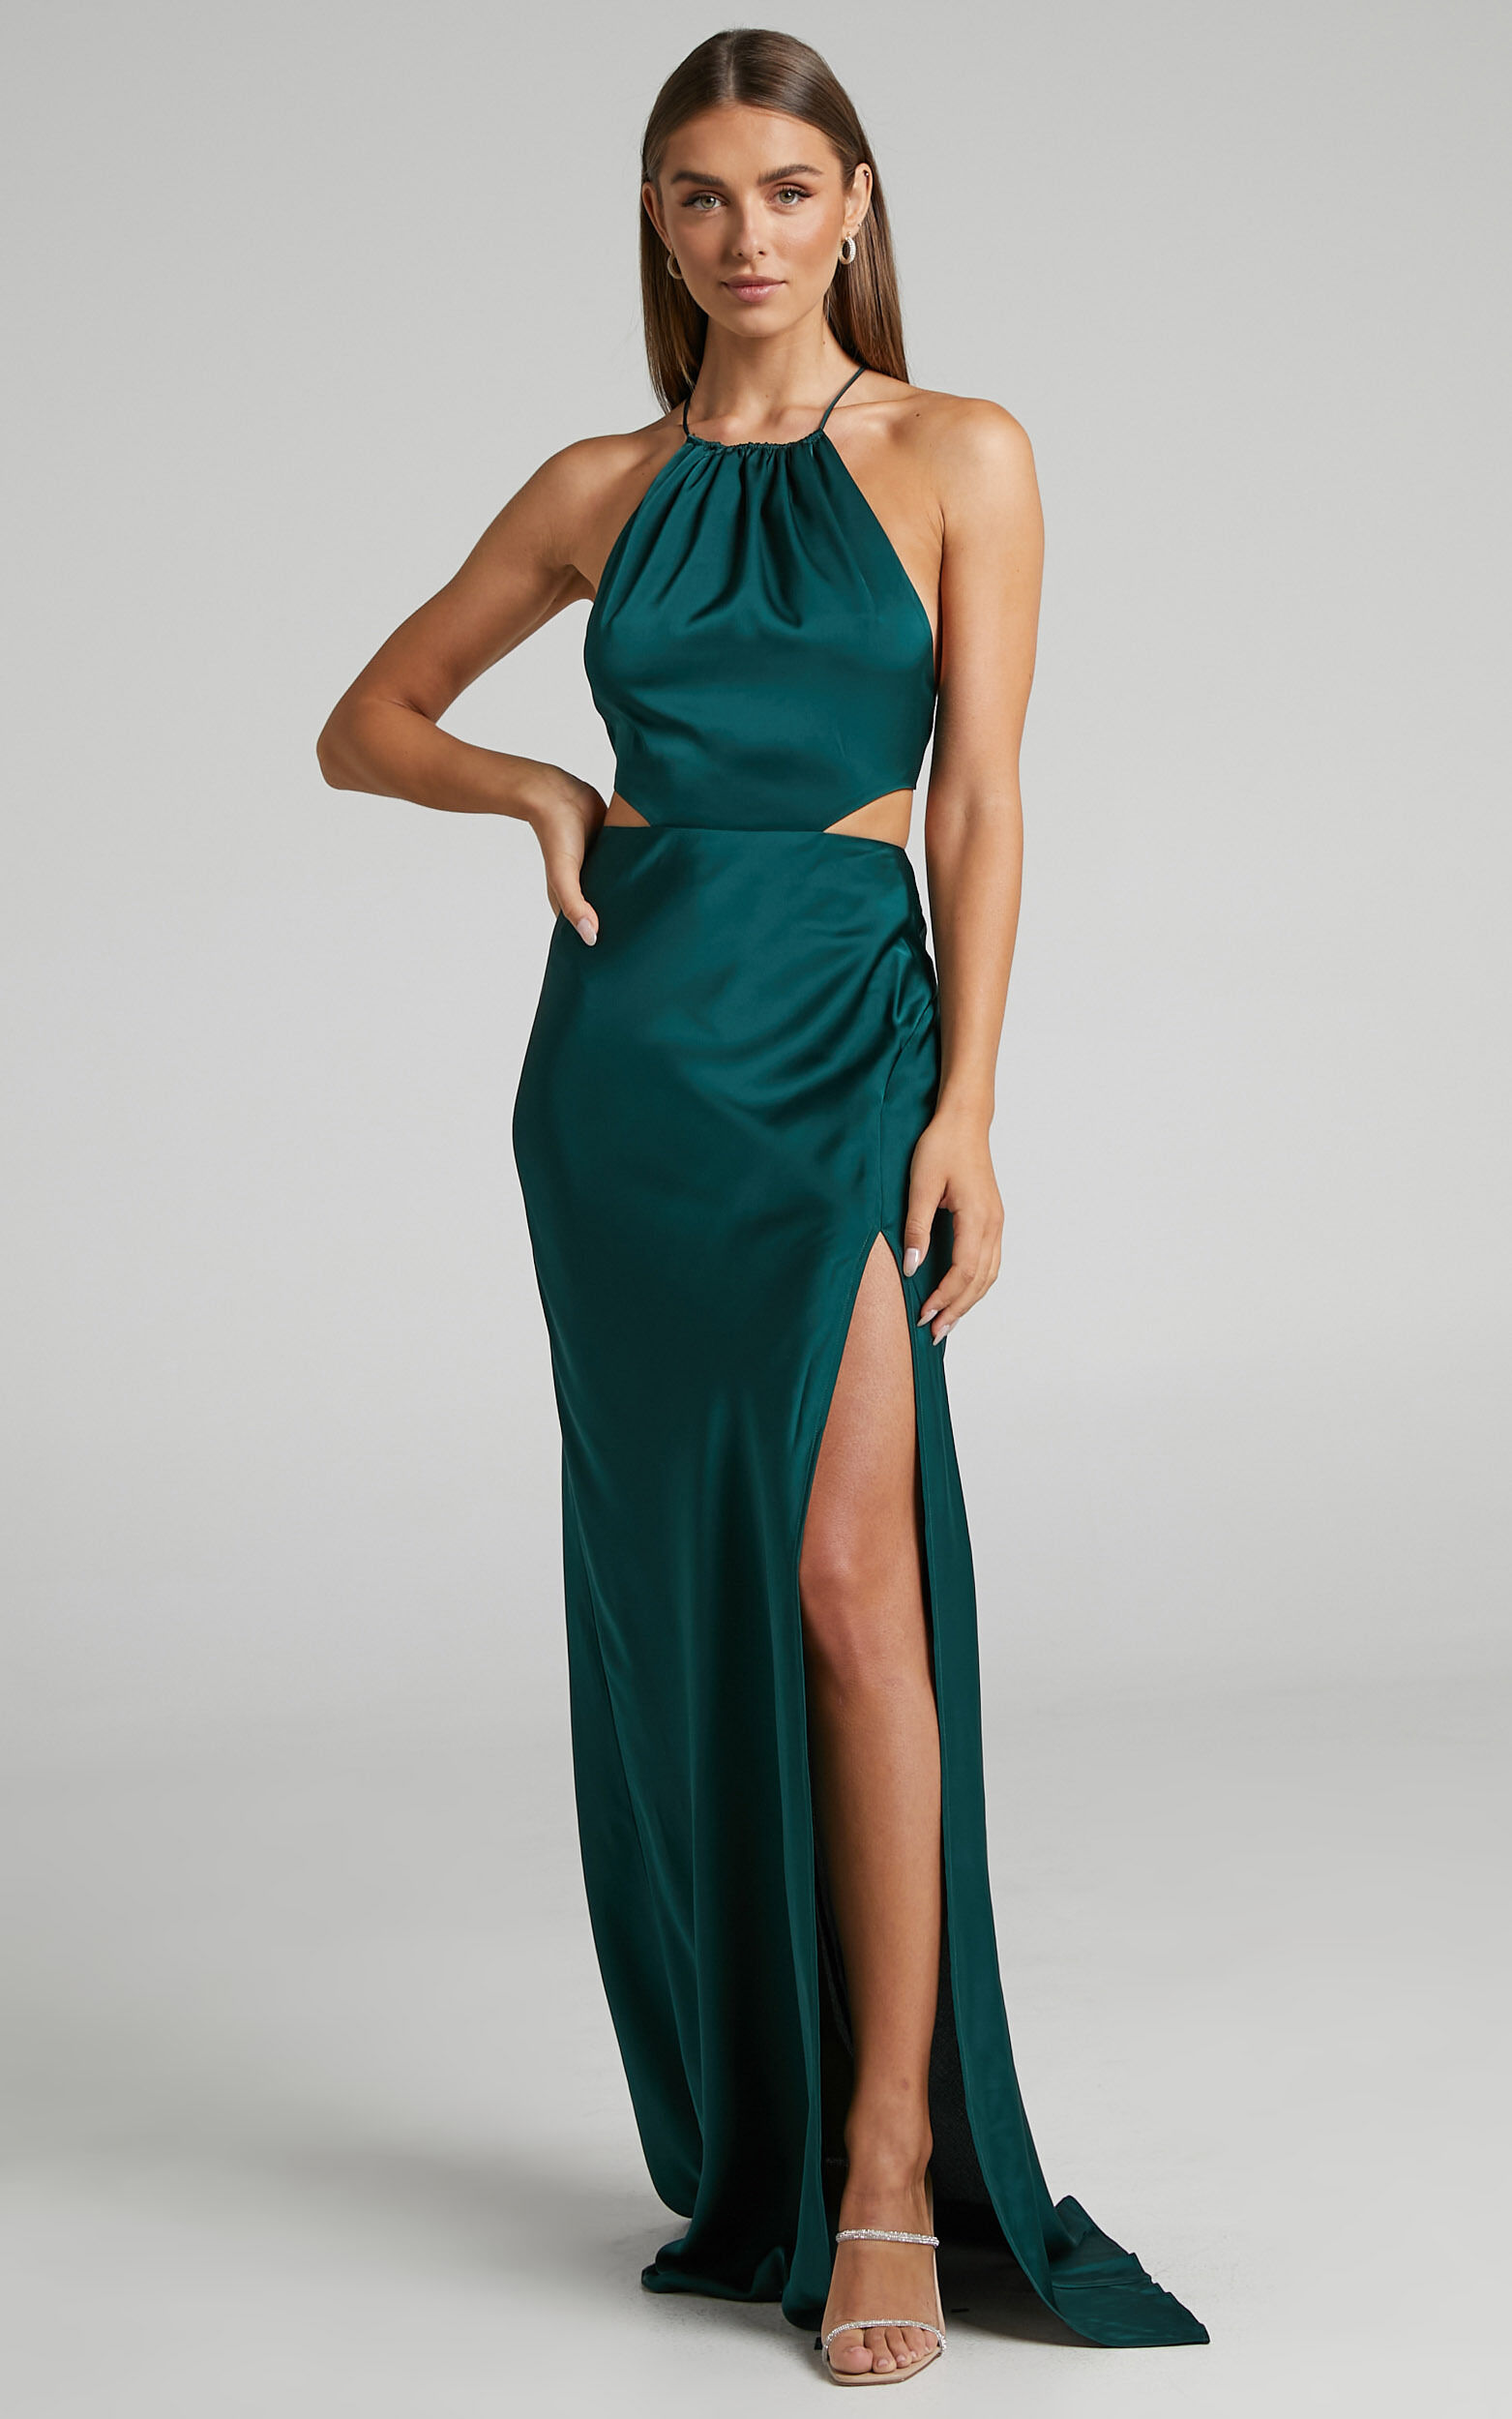 Azrael Maxi Dress - Thigh Split High Neck Tie Back Satin Dress in Emerald - 04, GRN2